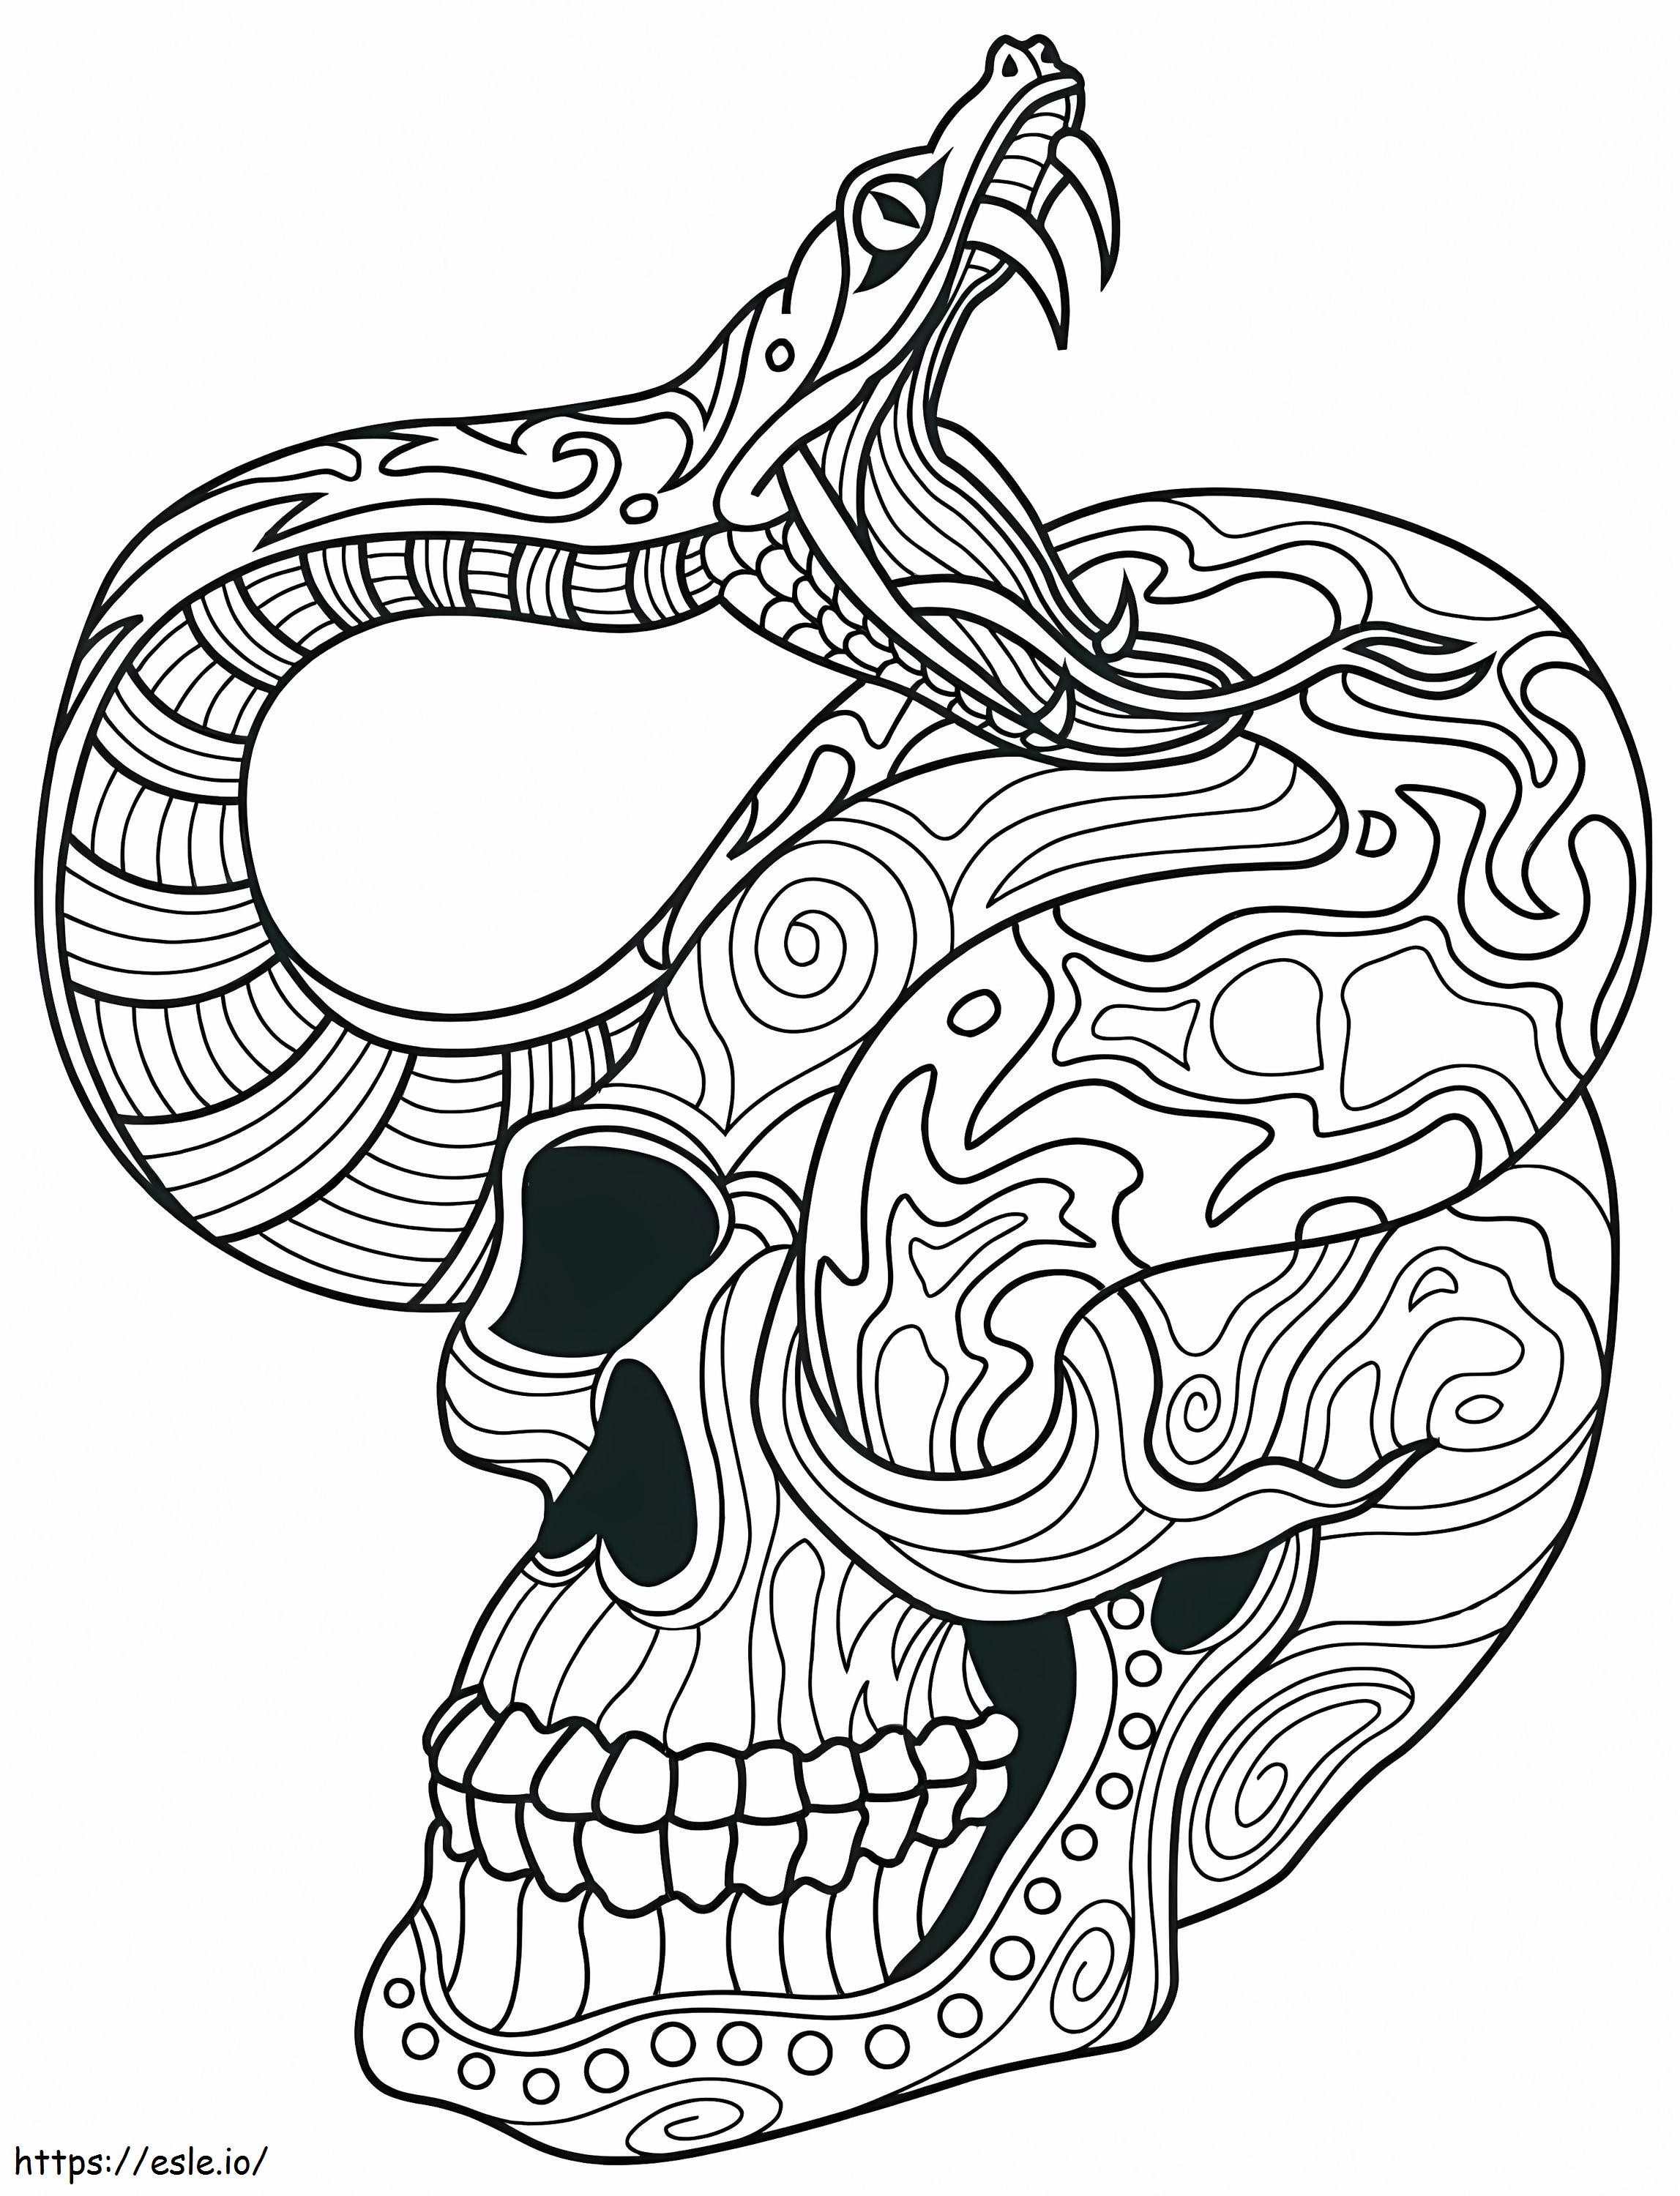 Skull With Snake Mandalas coloring page